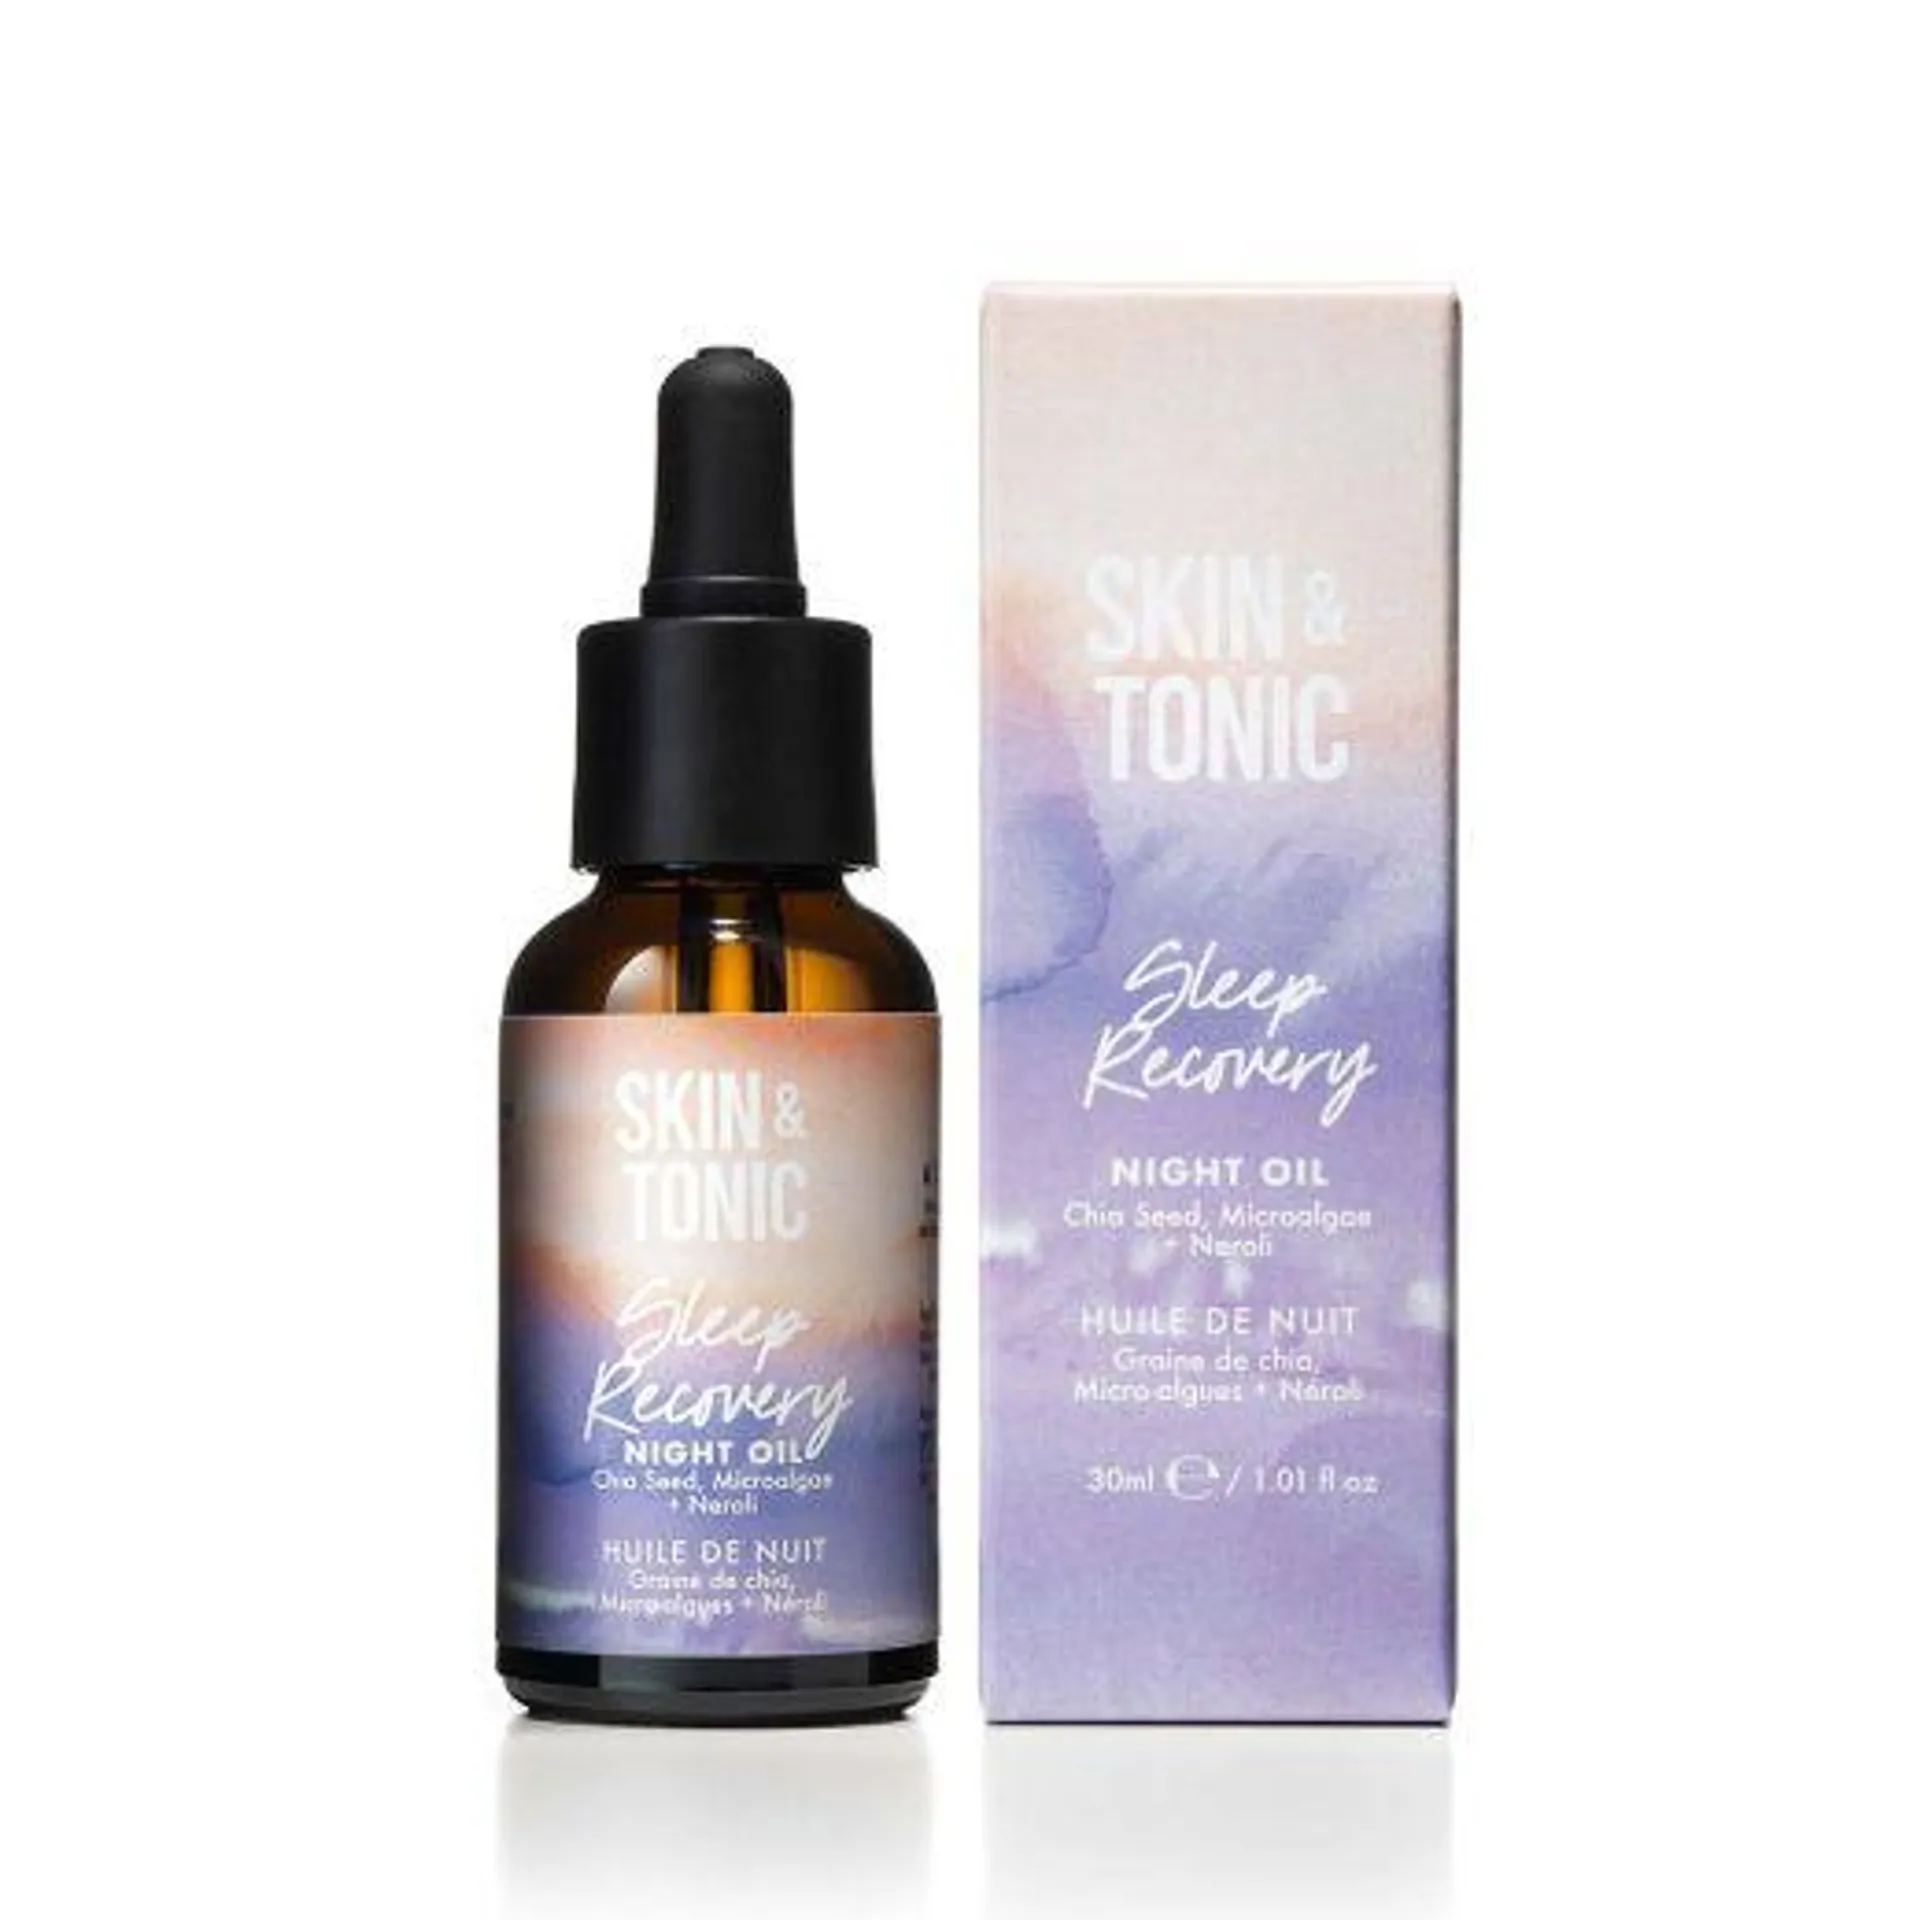 Skin & Tonic Sleep Recovery Night Oil